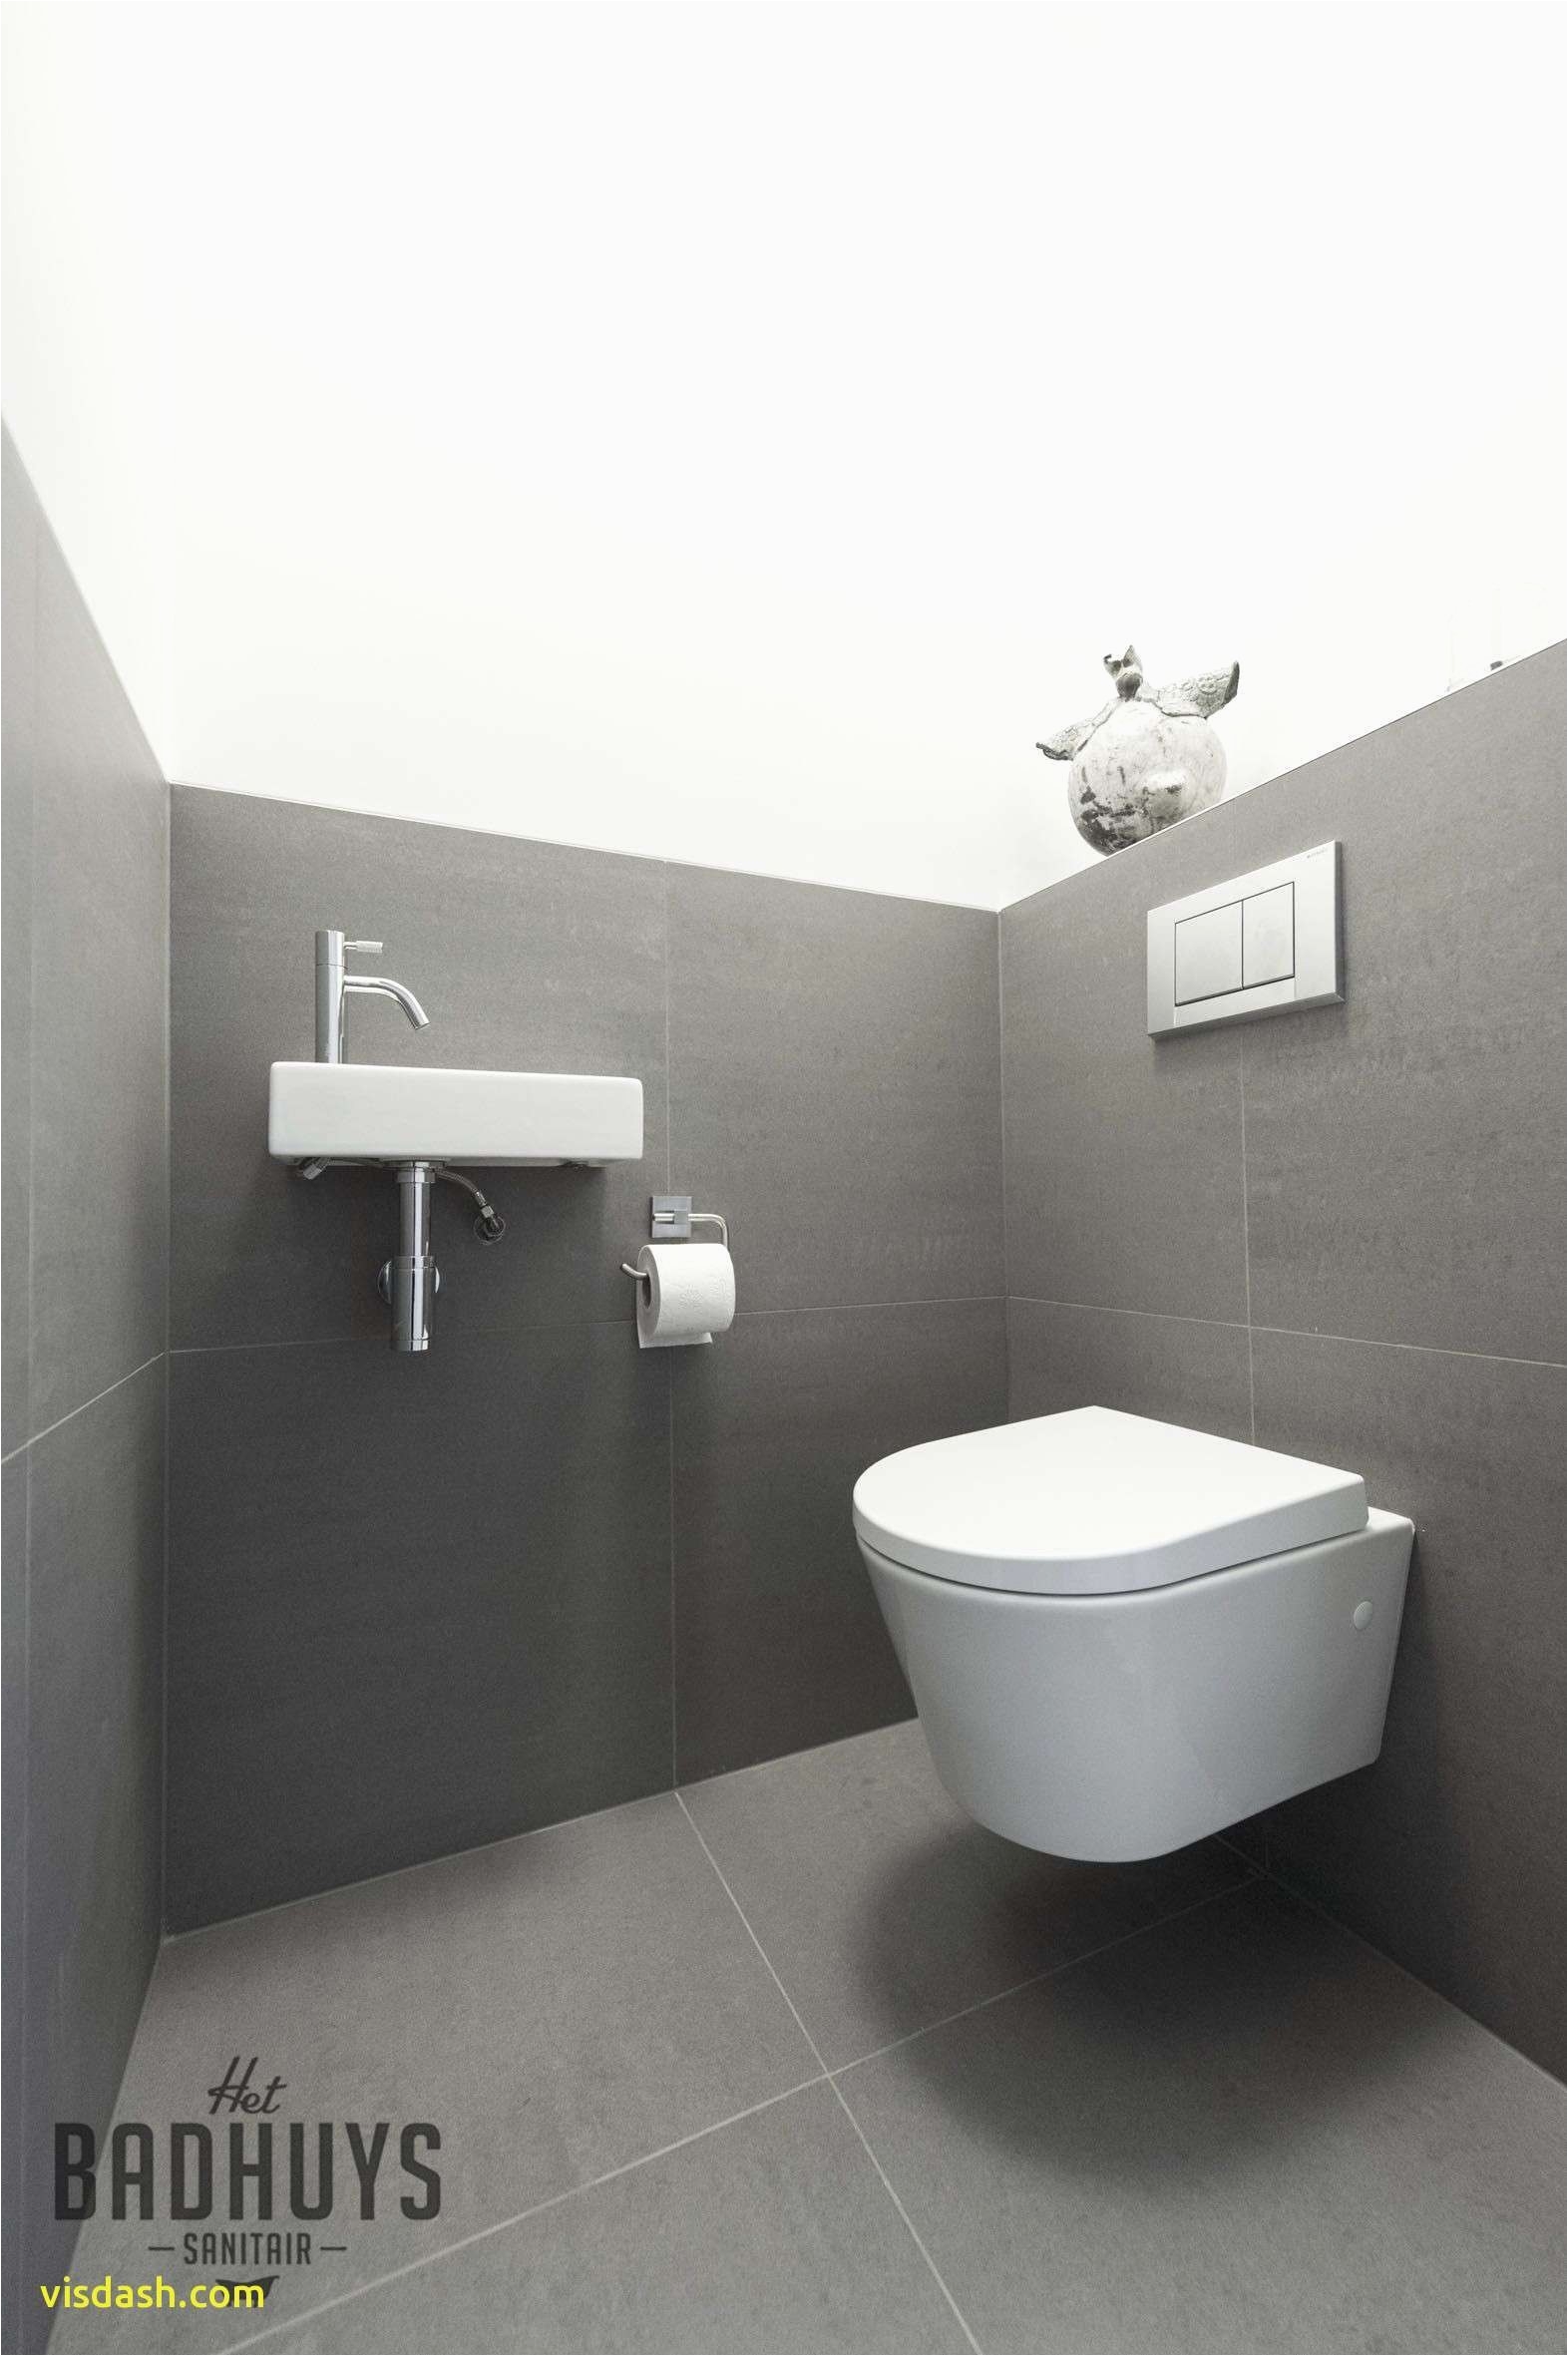 House Beautiful Bathroom Designs Beautiful Bathroom Picture Ideas Lovely Tag Toilet Ideas 0d